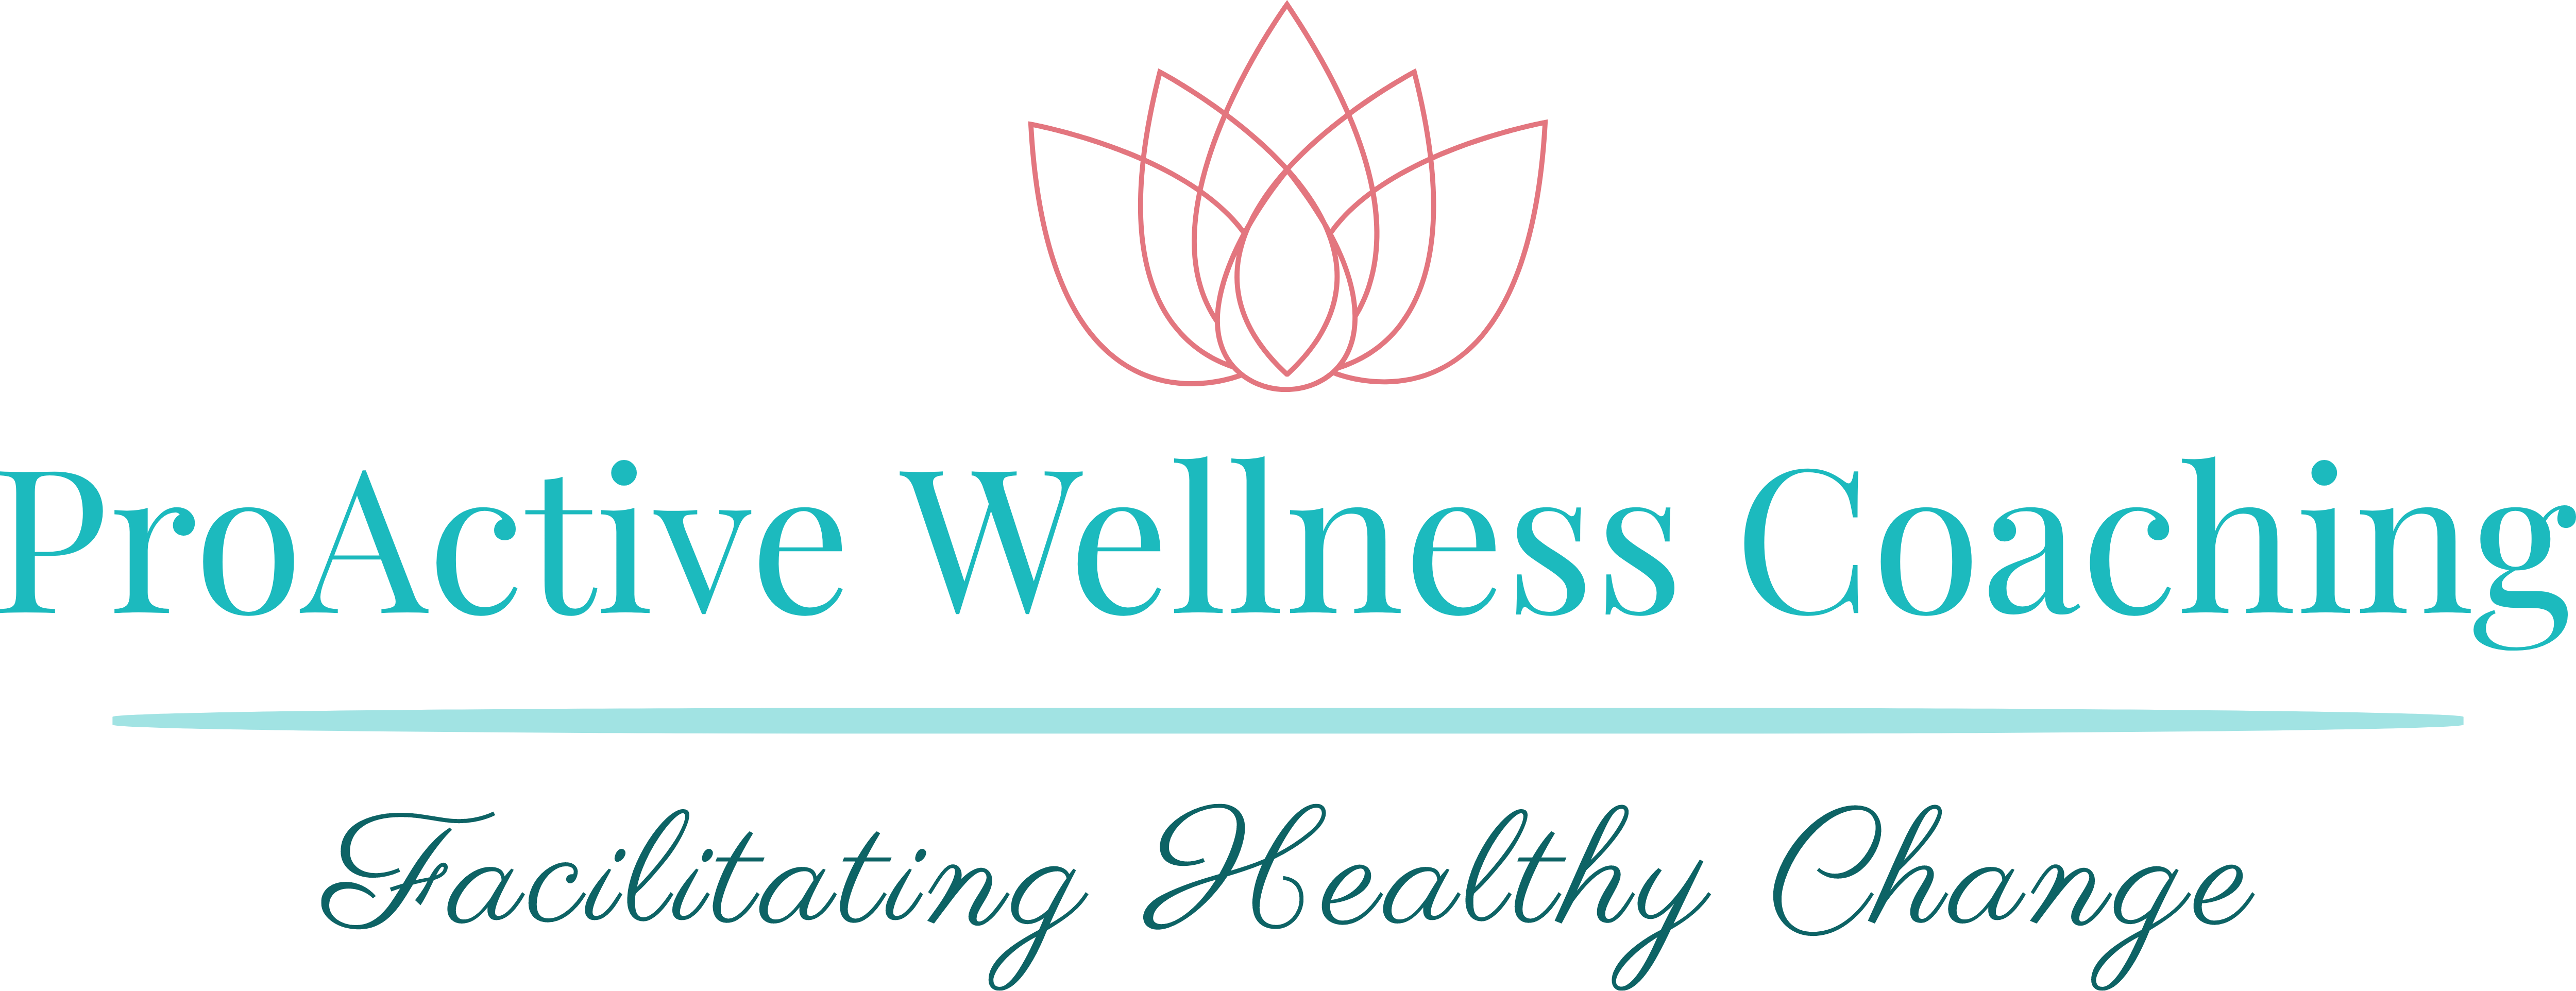 Proactive Wellness Coaching logo